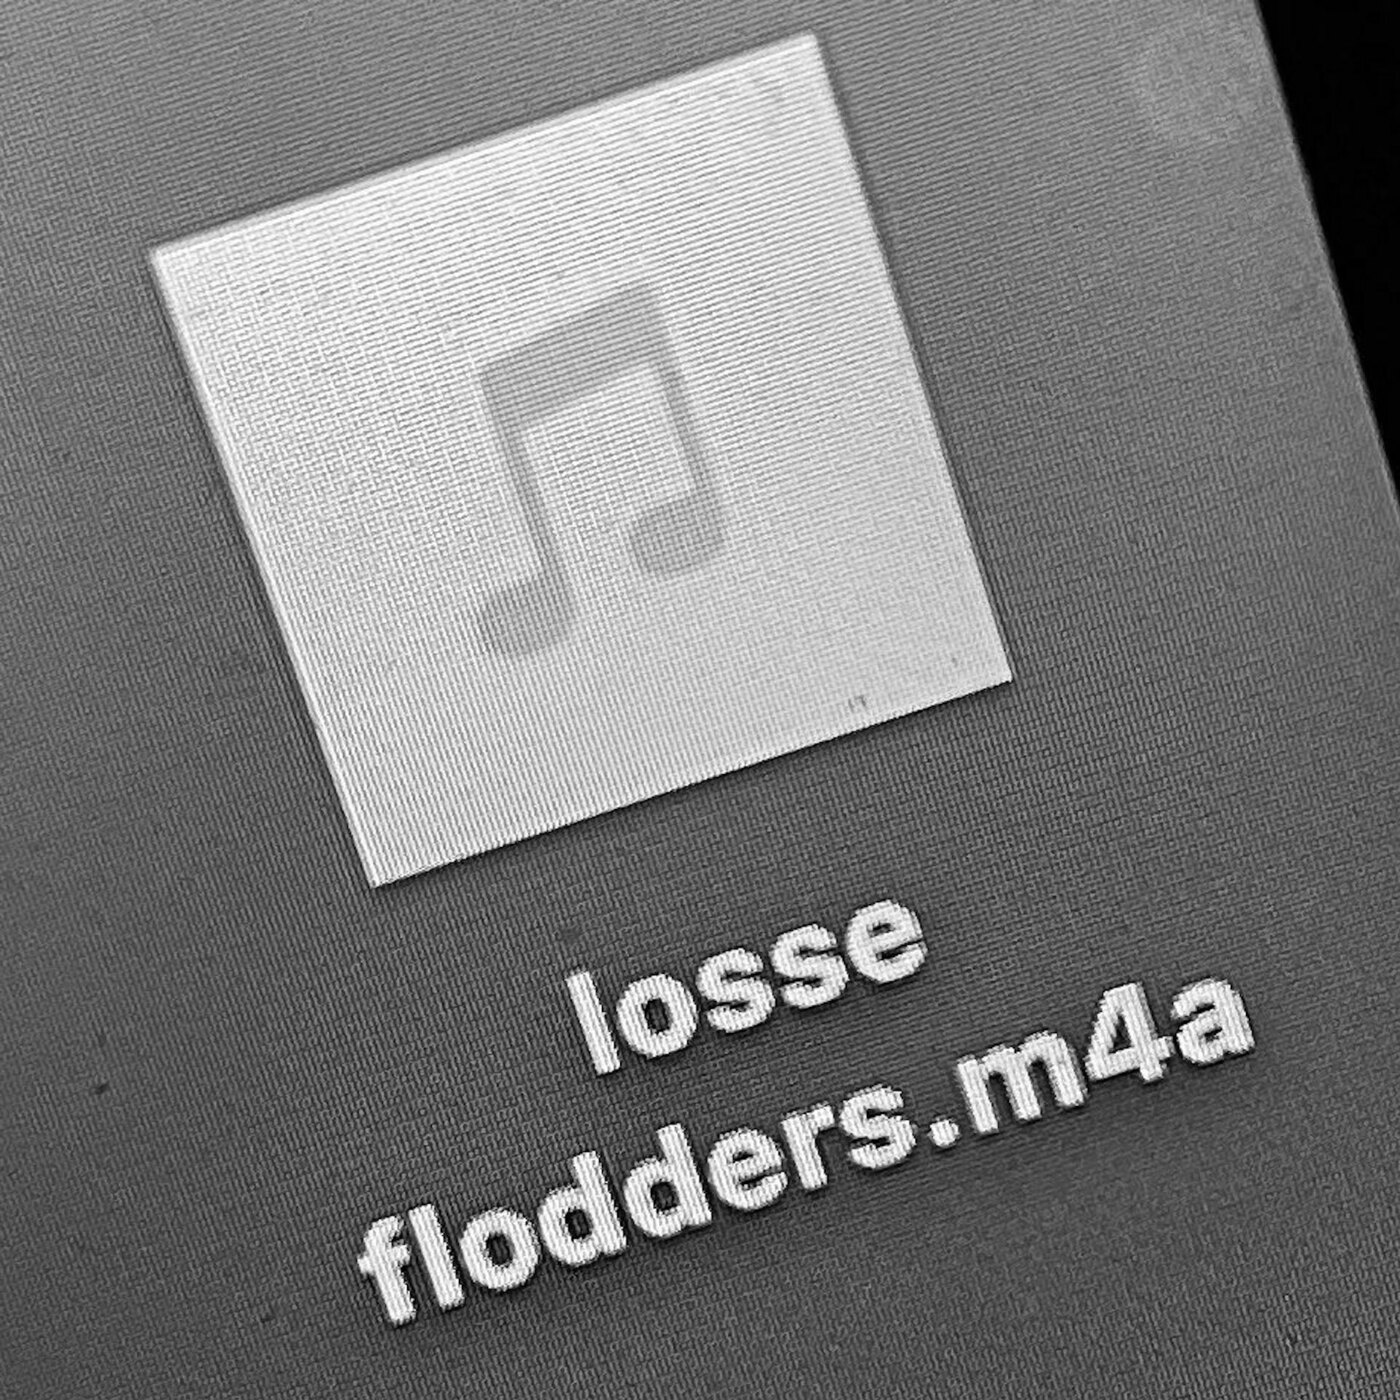 Losse Flodders